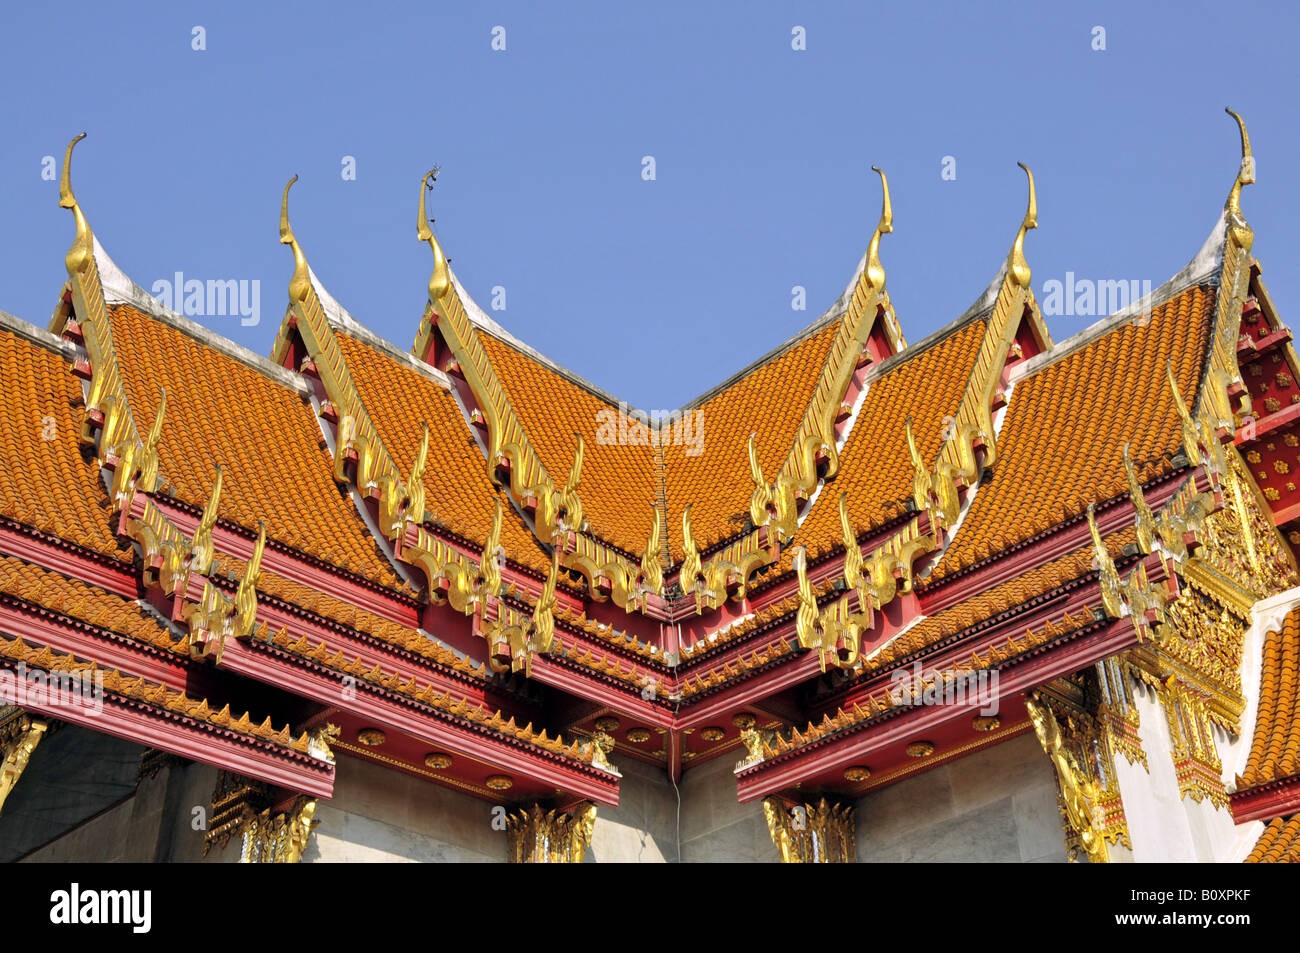 roof of the marble temple (Wat Benchamabophit), Thailand, Bangkok Stock Photo